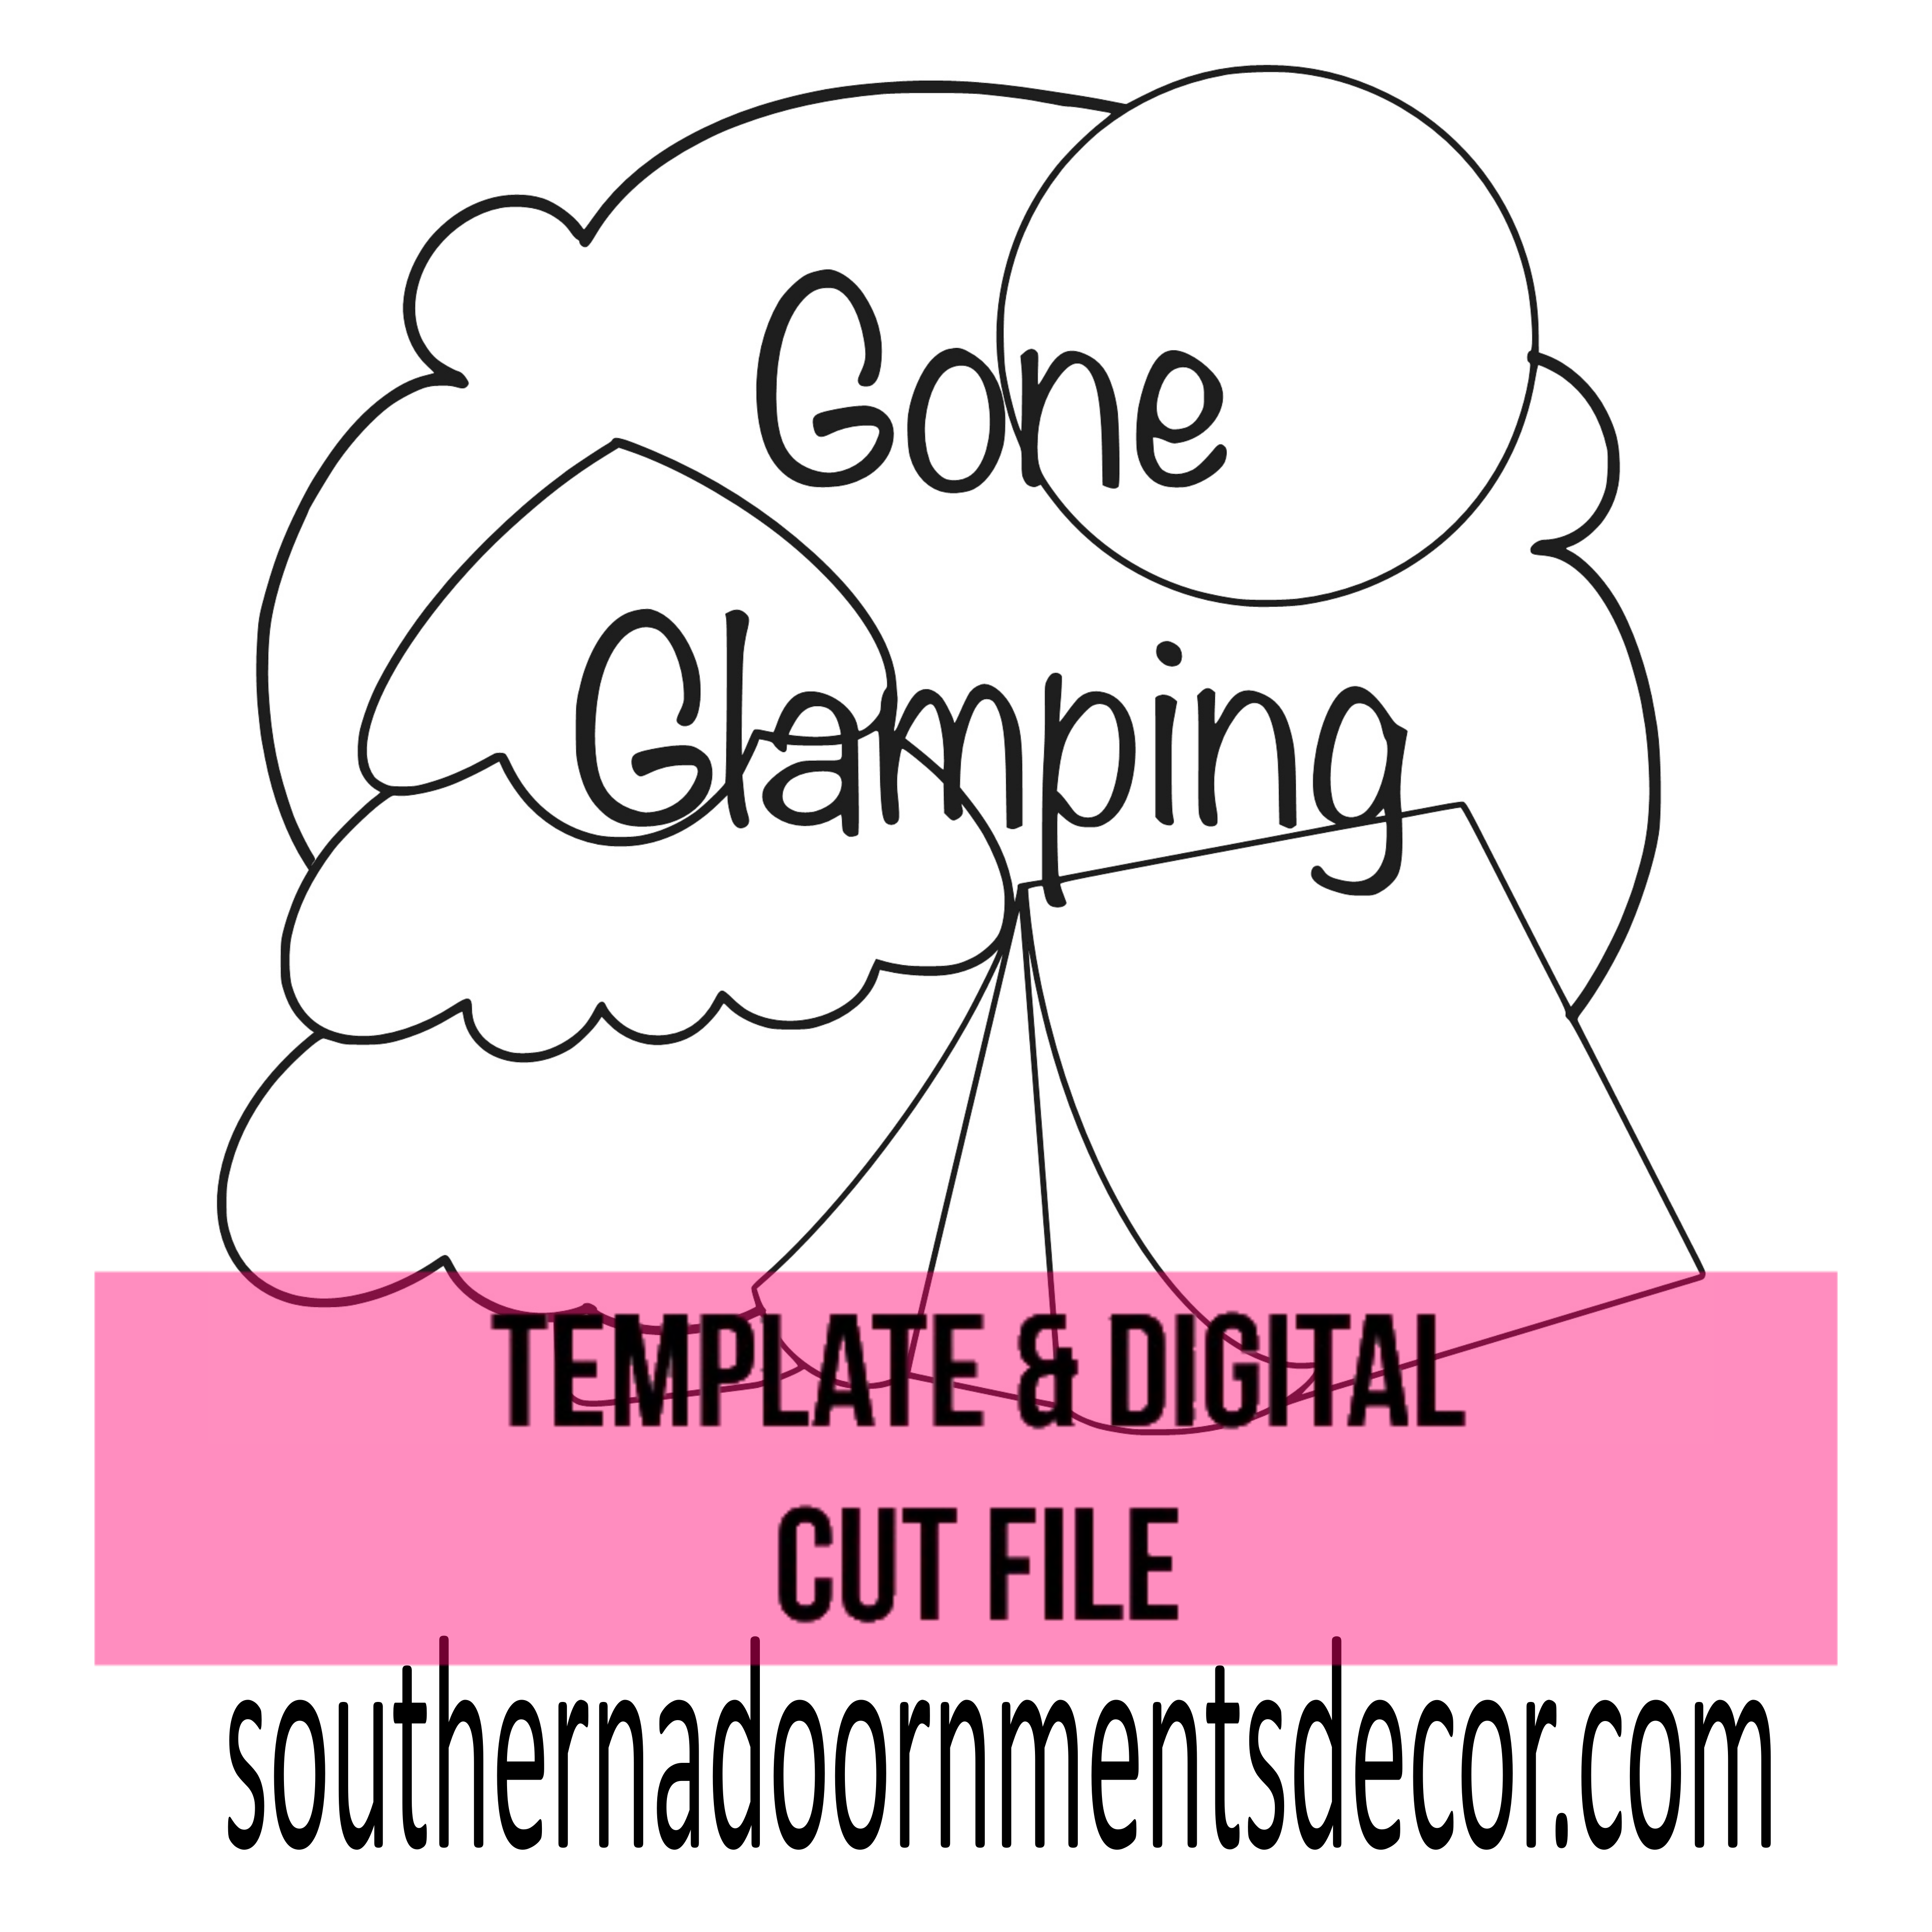 Gone Glamping Template & Digital Cut File